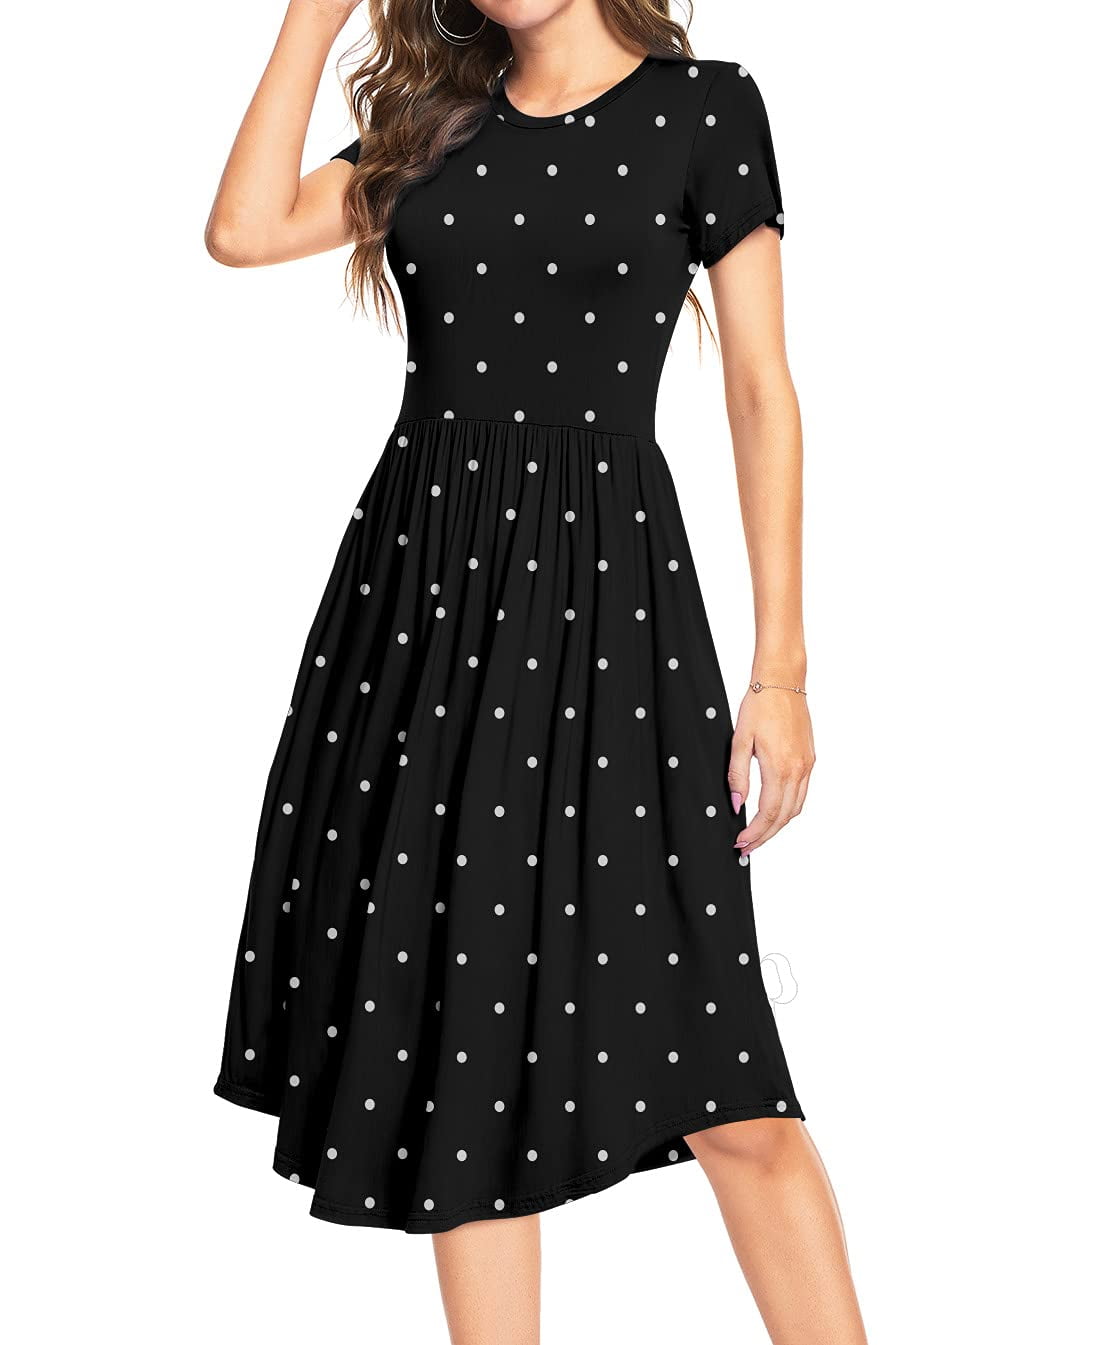 Outique Wrap Dress,Women Elegant Wave Point Sashes Knee-Length Casual Dress Summer Business Dress